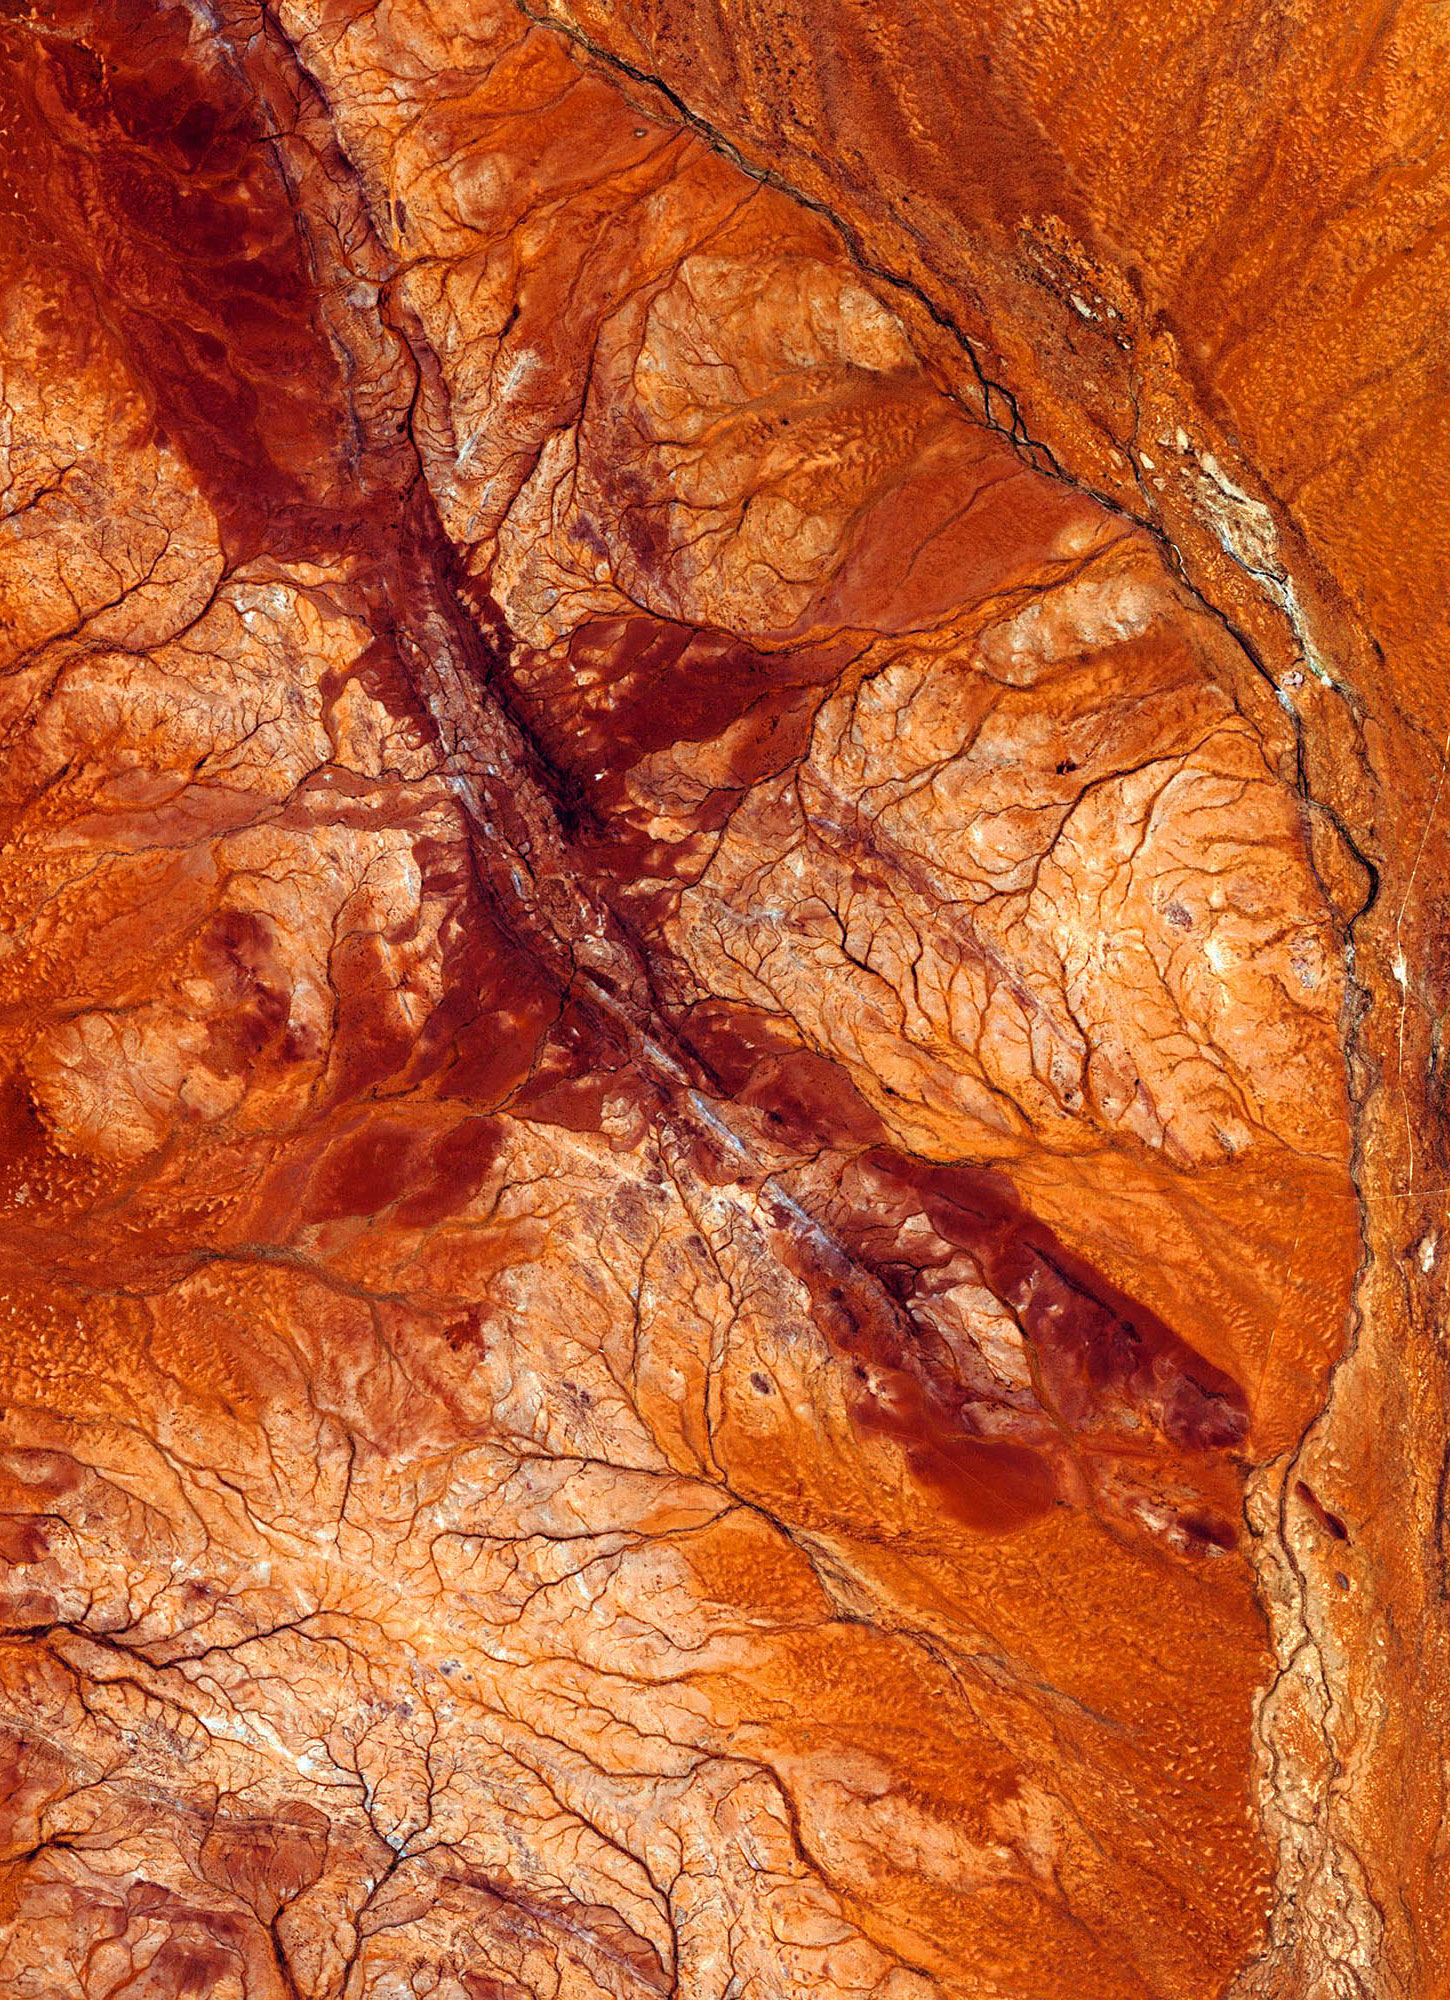 Satellite image—Jack Hills, Narryer Gneiss Terrane, Yilgarn Craton, Western Australia. Image credit: NASA/GSFC/METI/
ERSDAC/JAROS, and US/Japan Advanced Spaceborne Thermal Emission and Reflection (ASTER) Science Team.